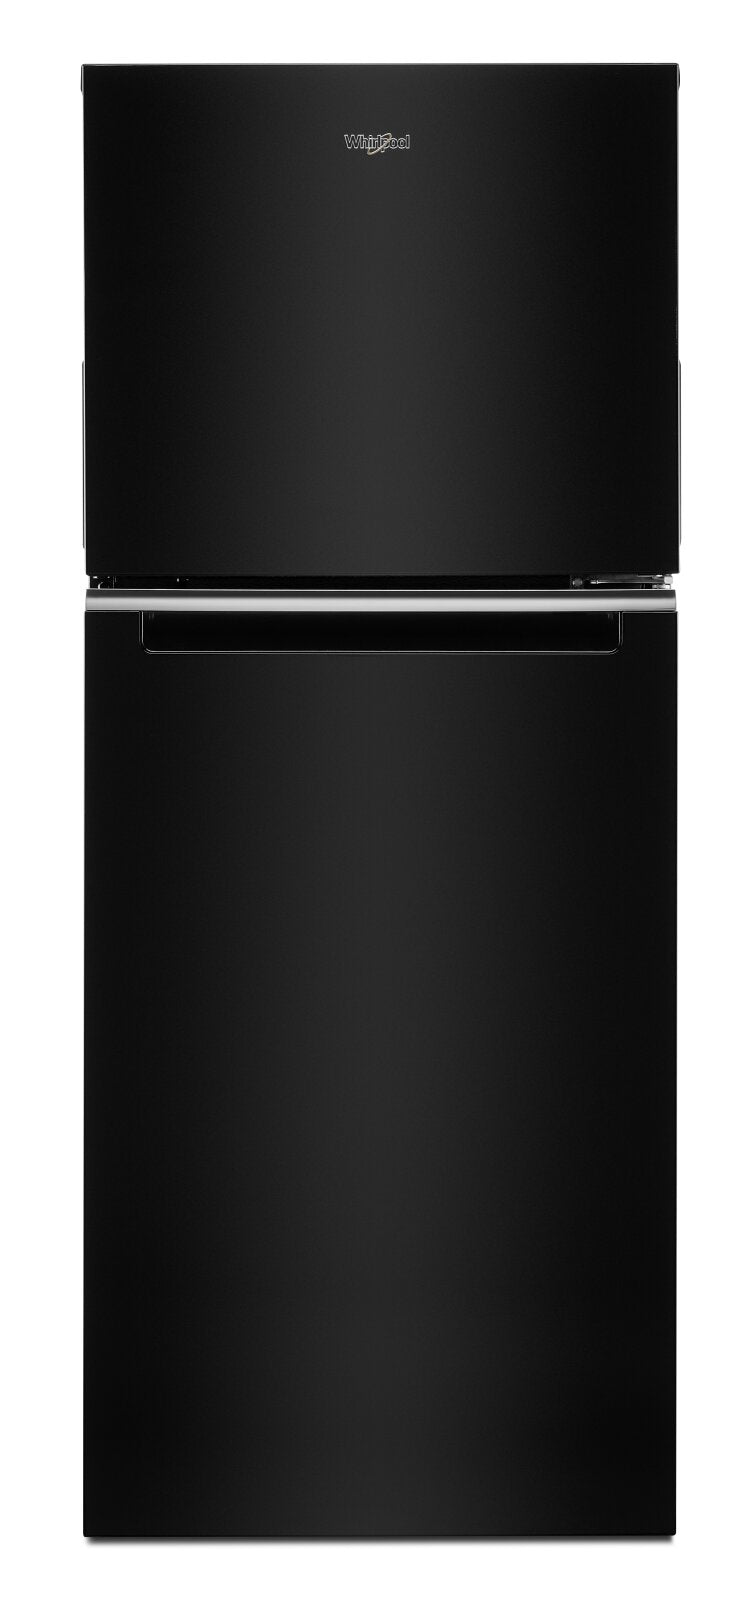 Whirlpool 11.6 Cu. Ft. Top-Freezer Refrigerator - WRT312CZJB|Réfrigérateur Whirlpool de 11,6 pi³ à congélateur supérieur - WRT312CZJB|WRT312JB